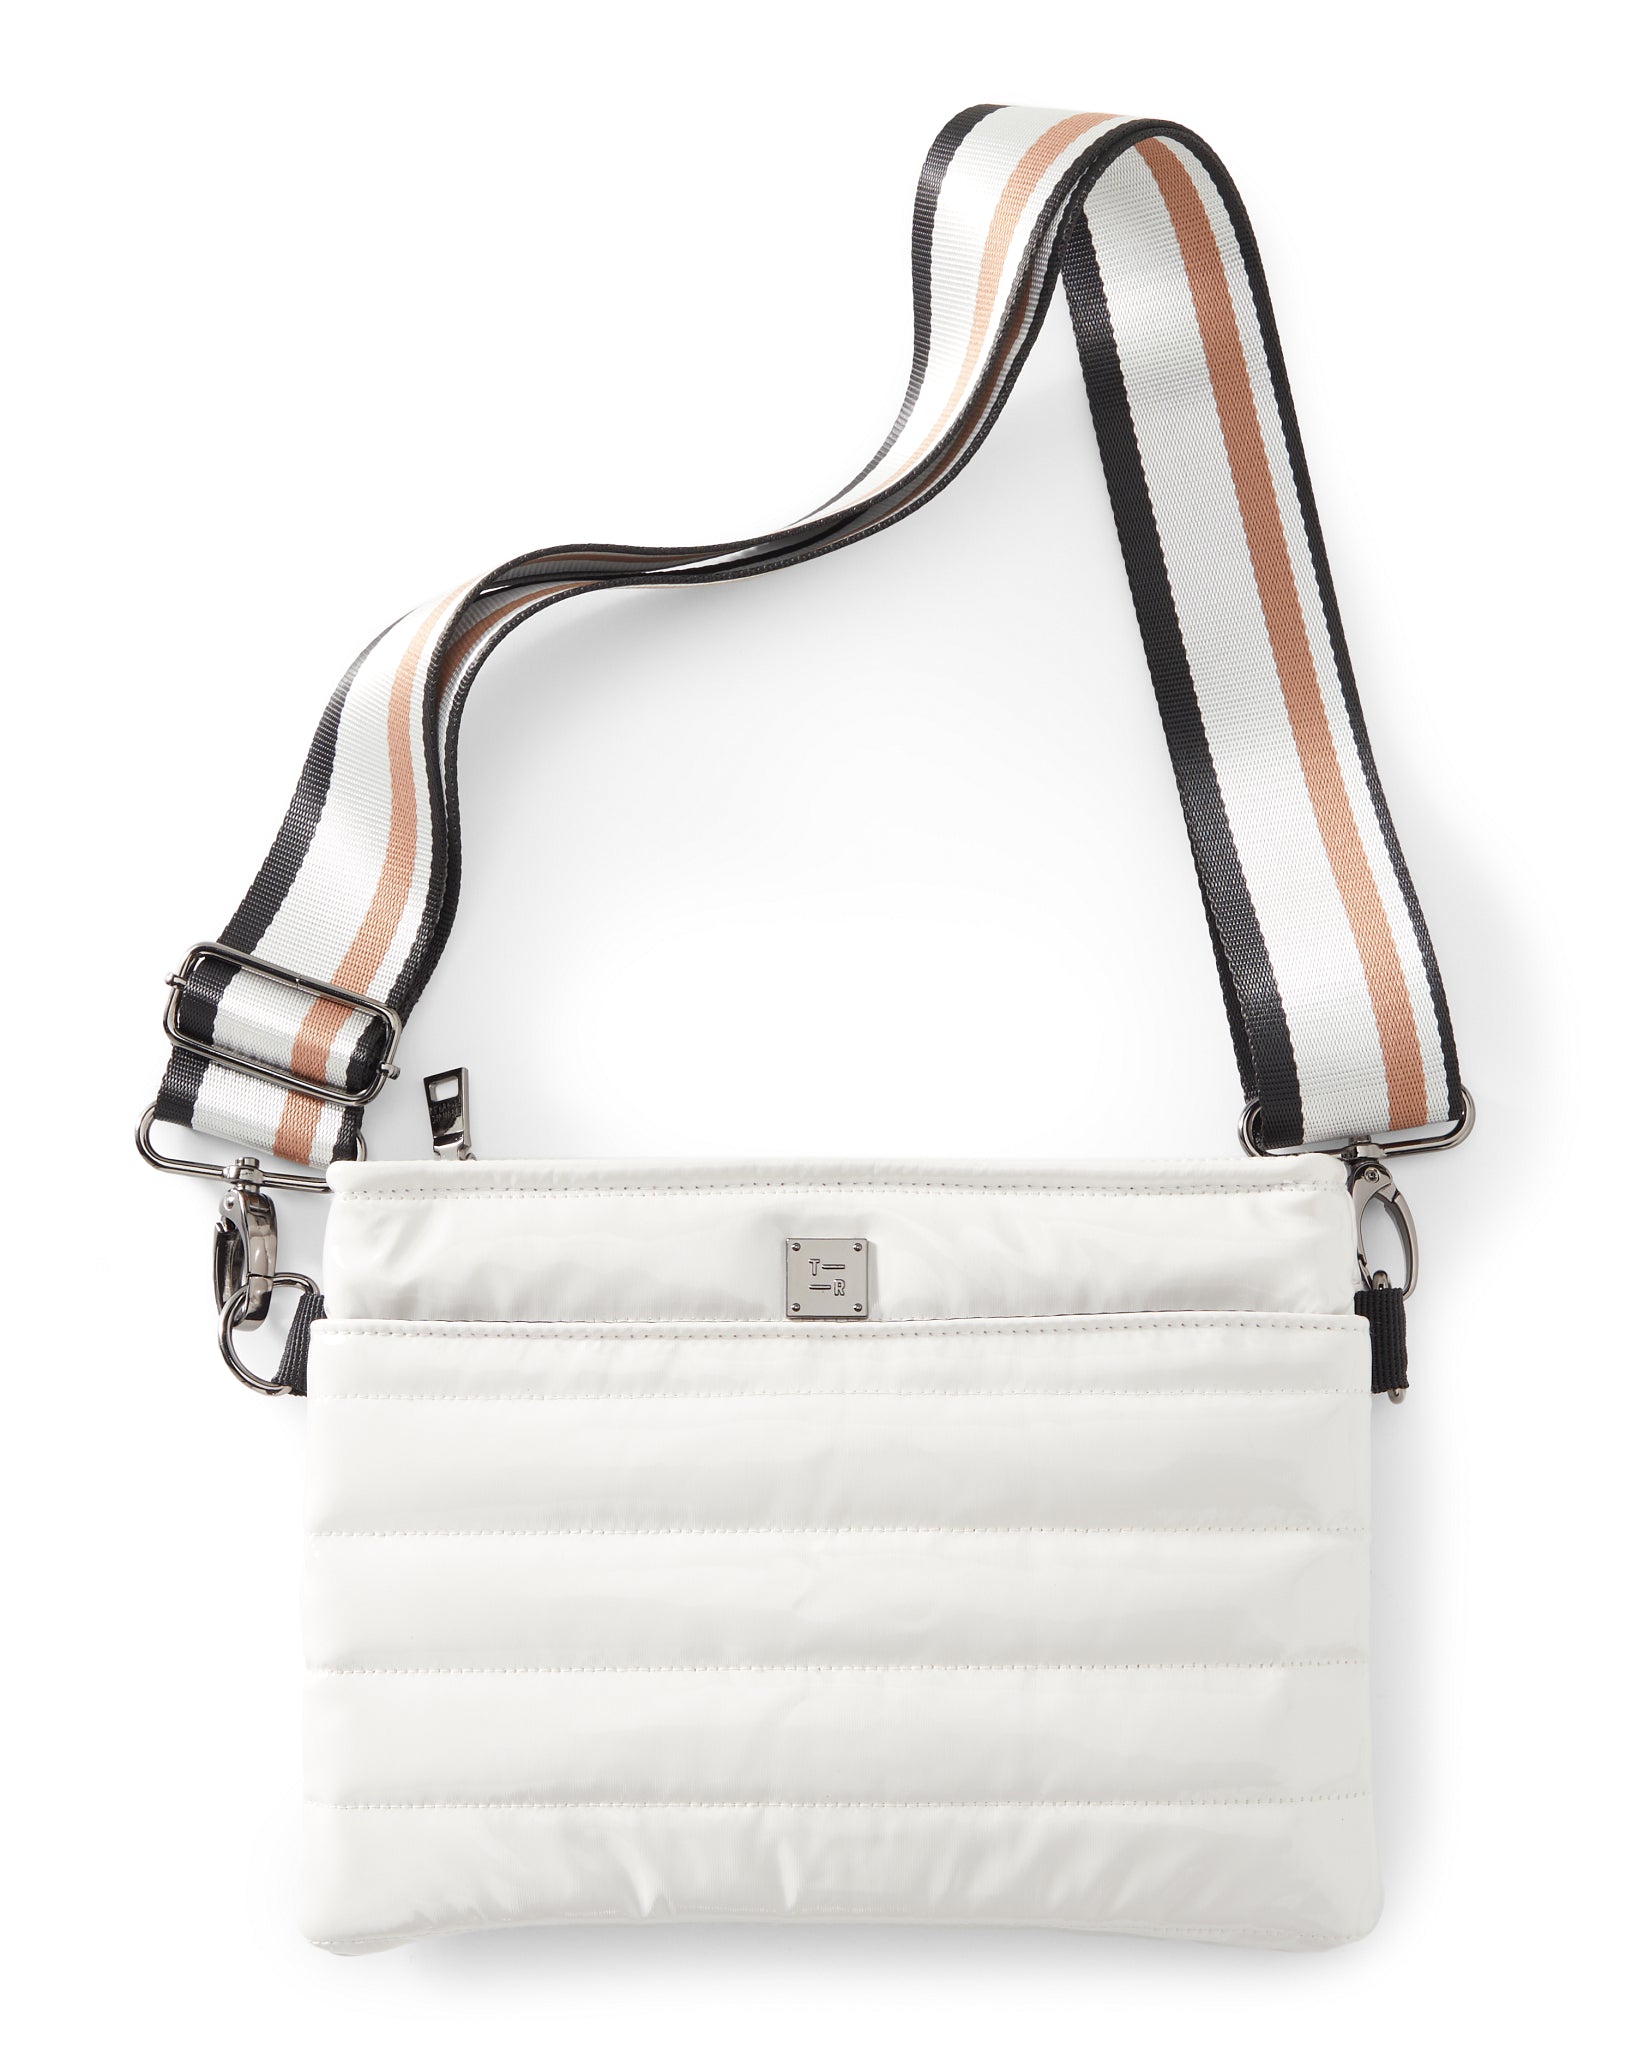 Think Royln Bum Bag 2.0 Multi Use Handbag in Pearl Cashmere